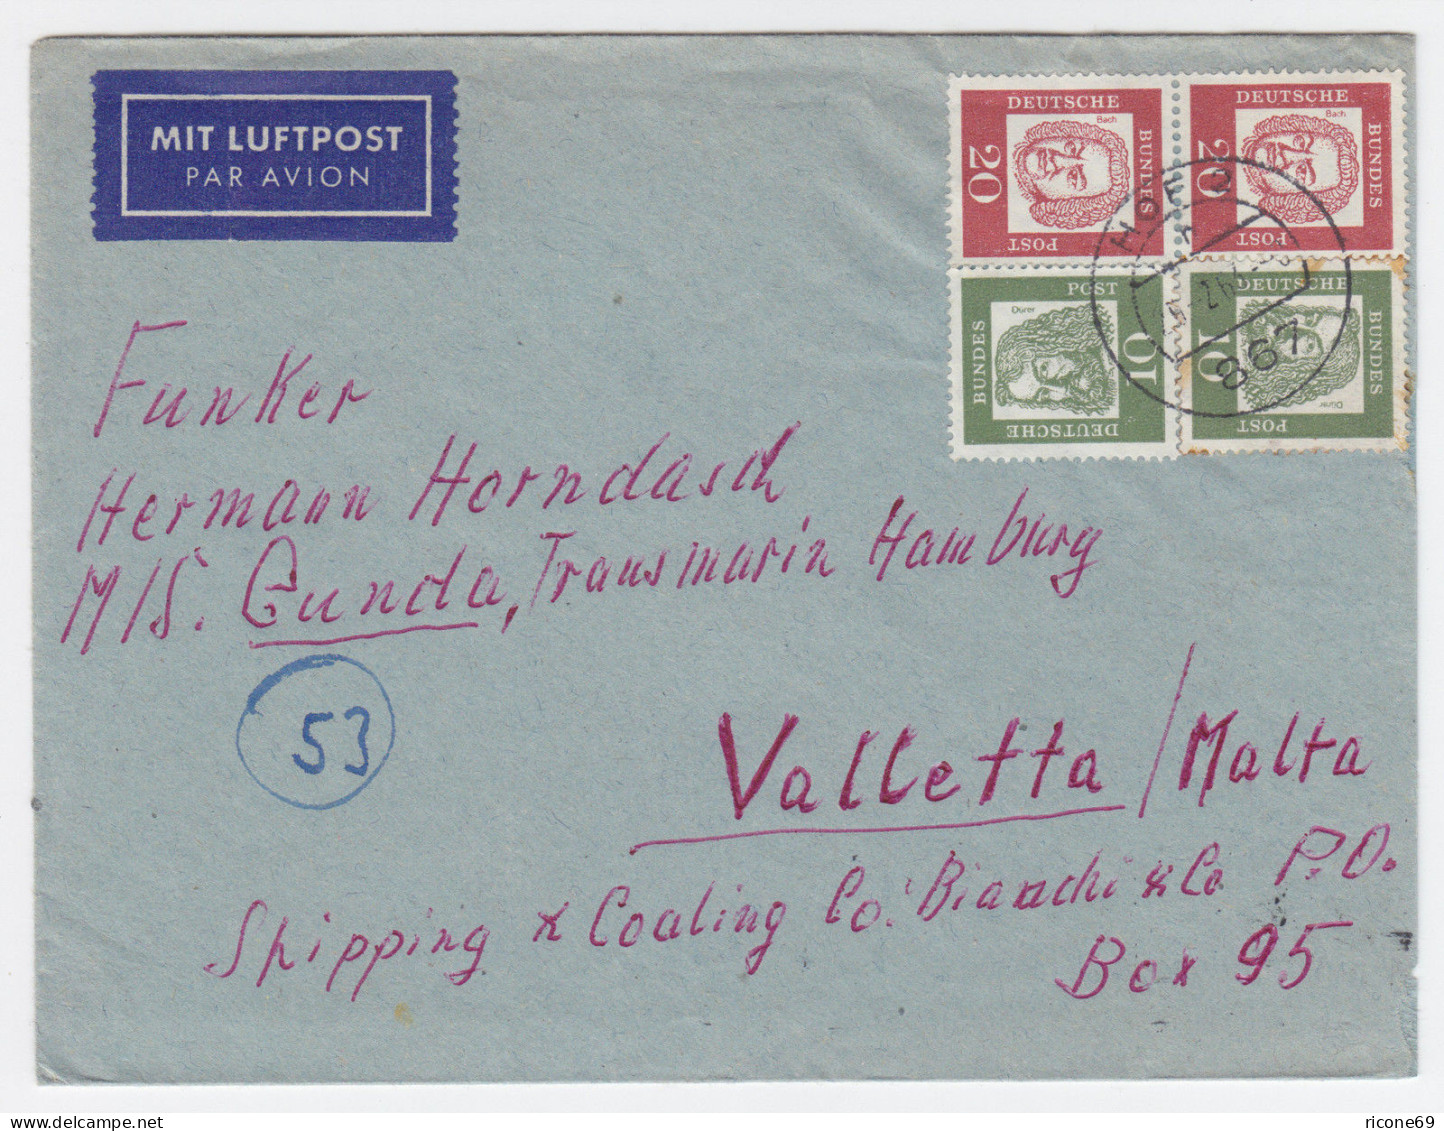 BRD 1963, 20+20+10+10 Pf. Auf Luftpost Brief V. Hof N. Malta. Destination! #1807 - Covers & Documents